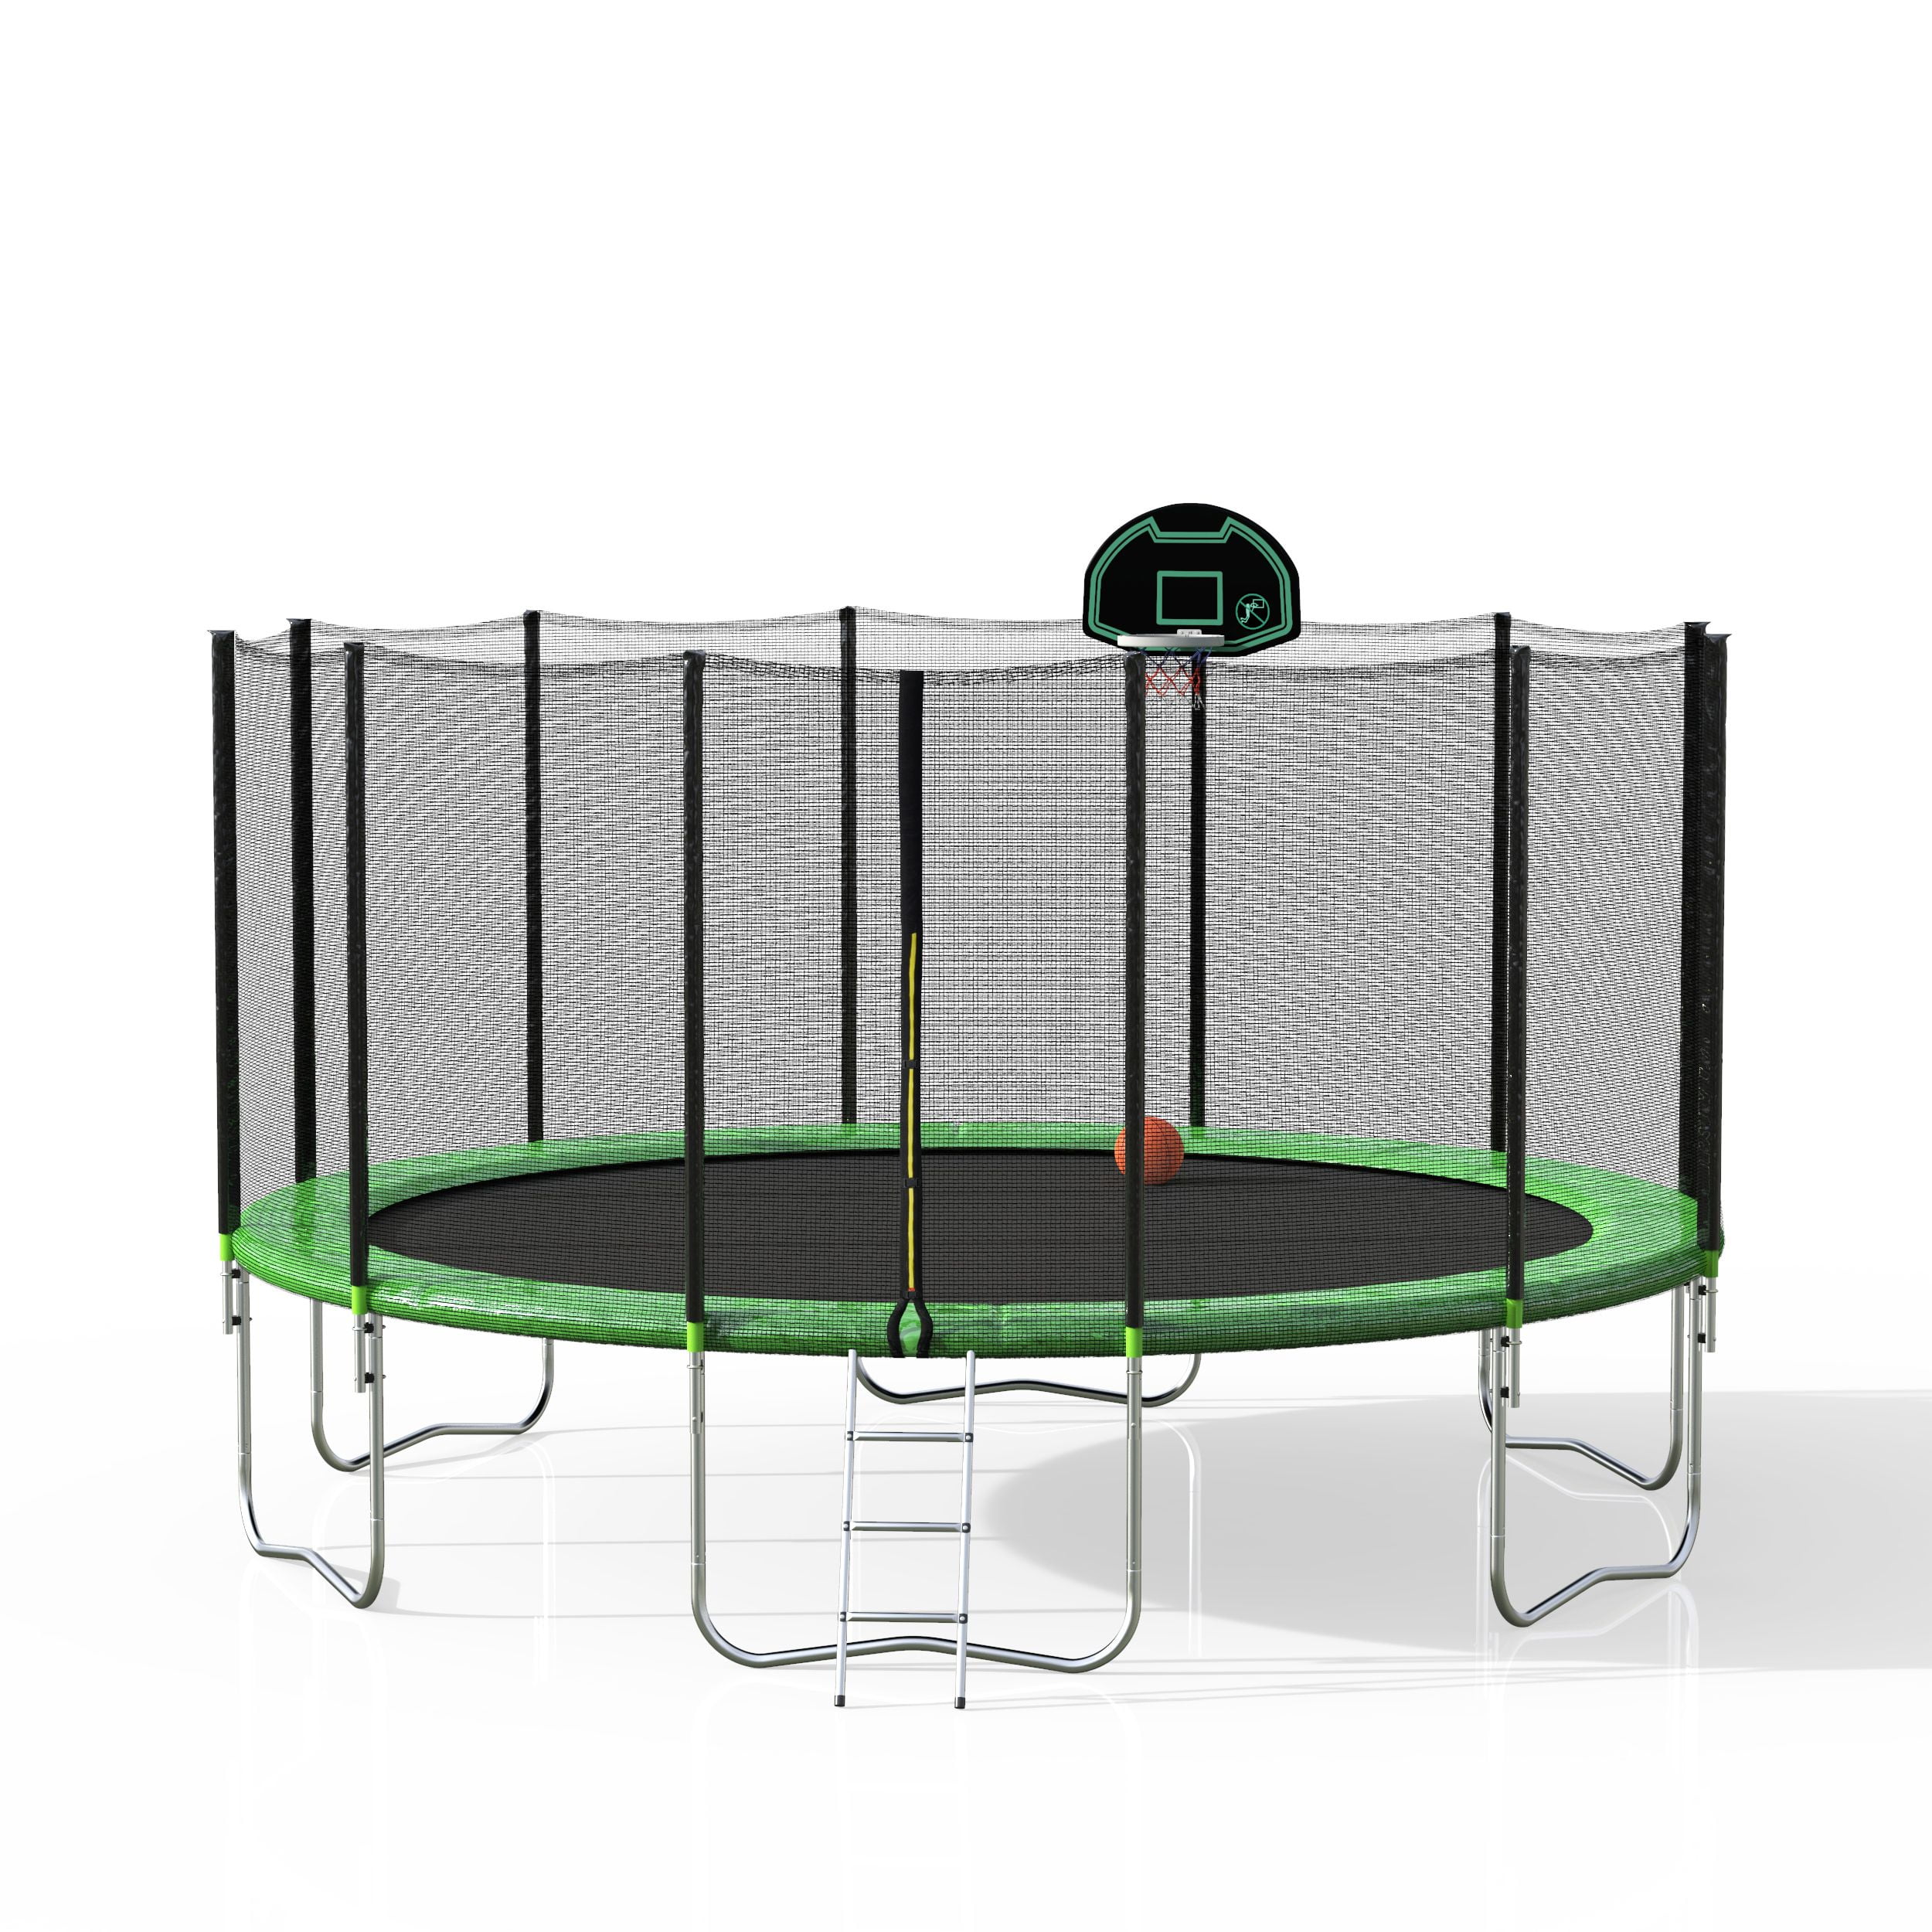 16FT Round Trampoline Enclosure Net Ladder Spring Cover Padding Basketball Hoop 